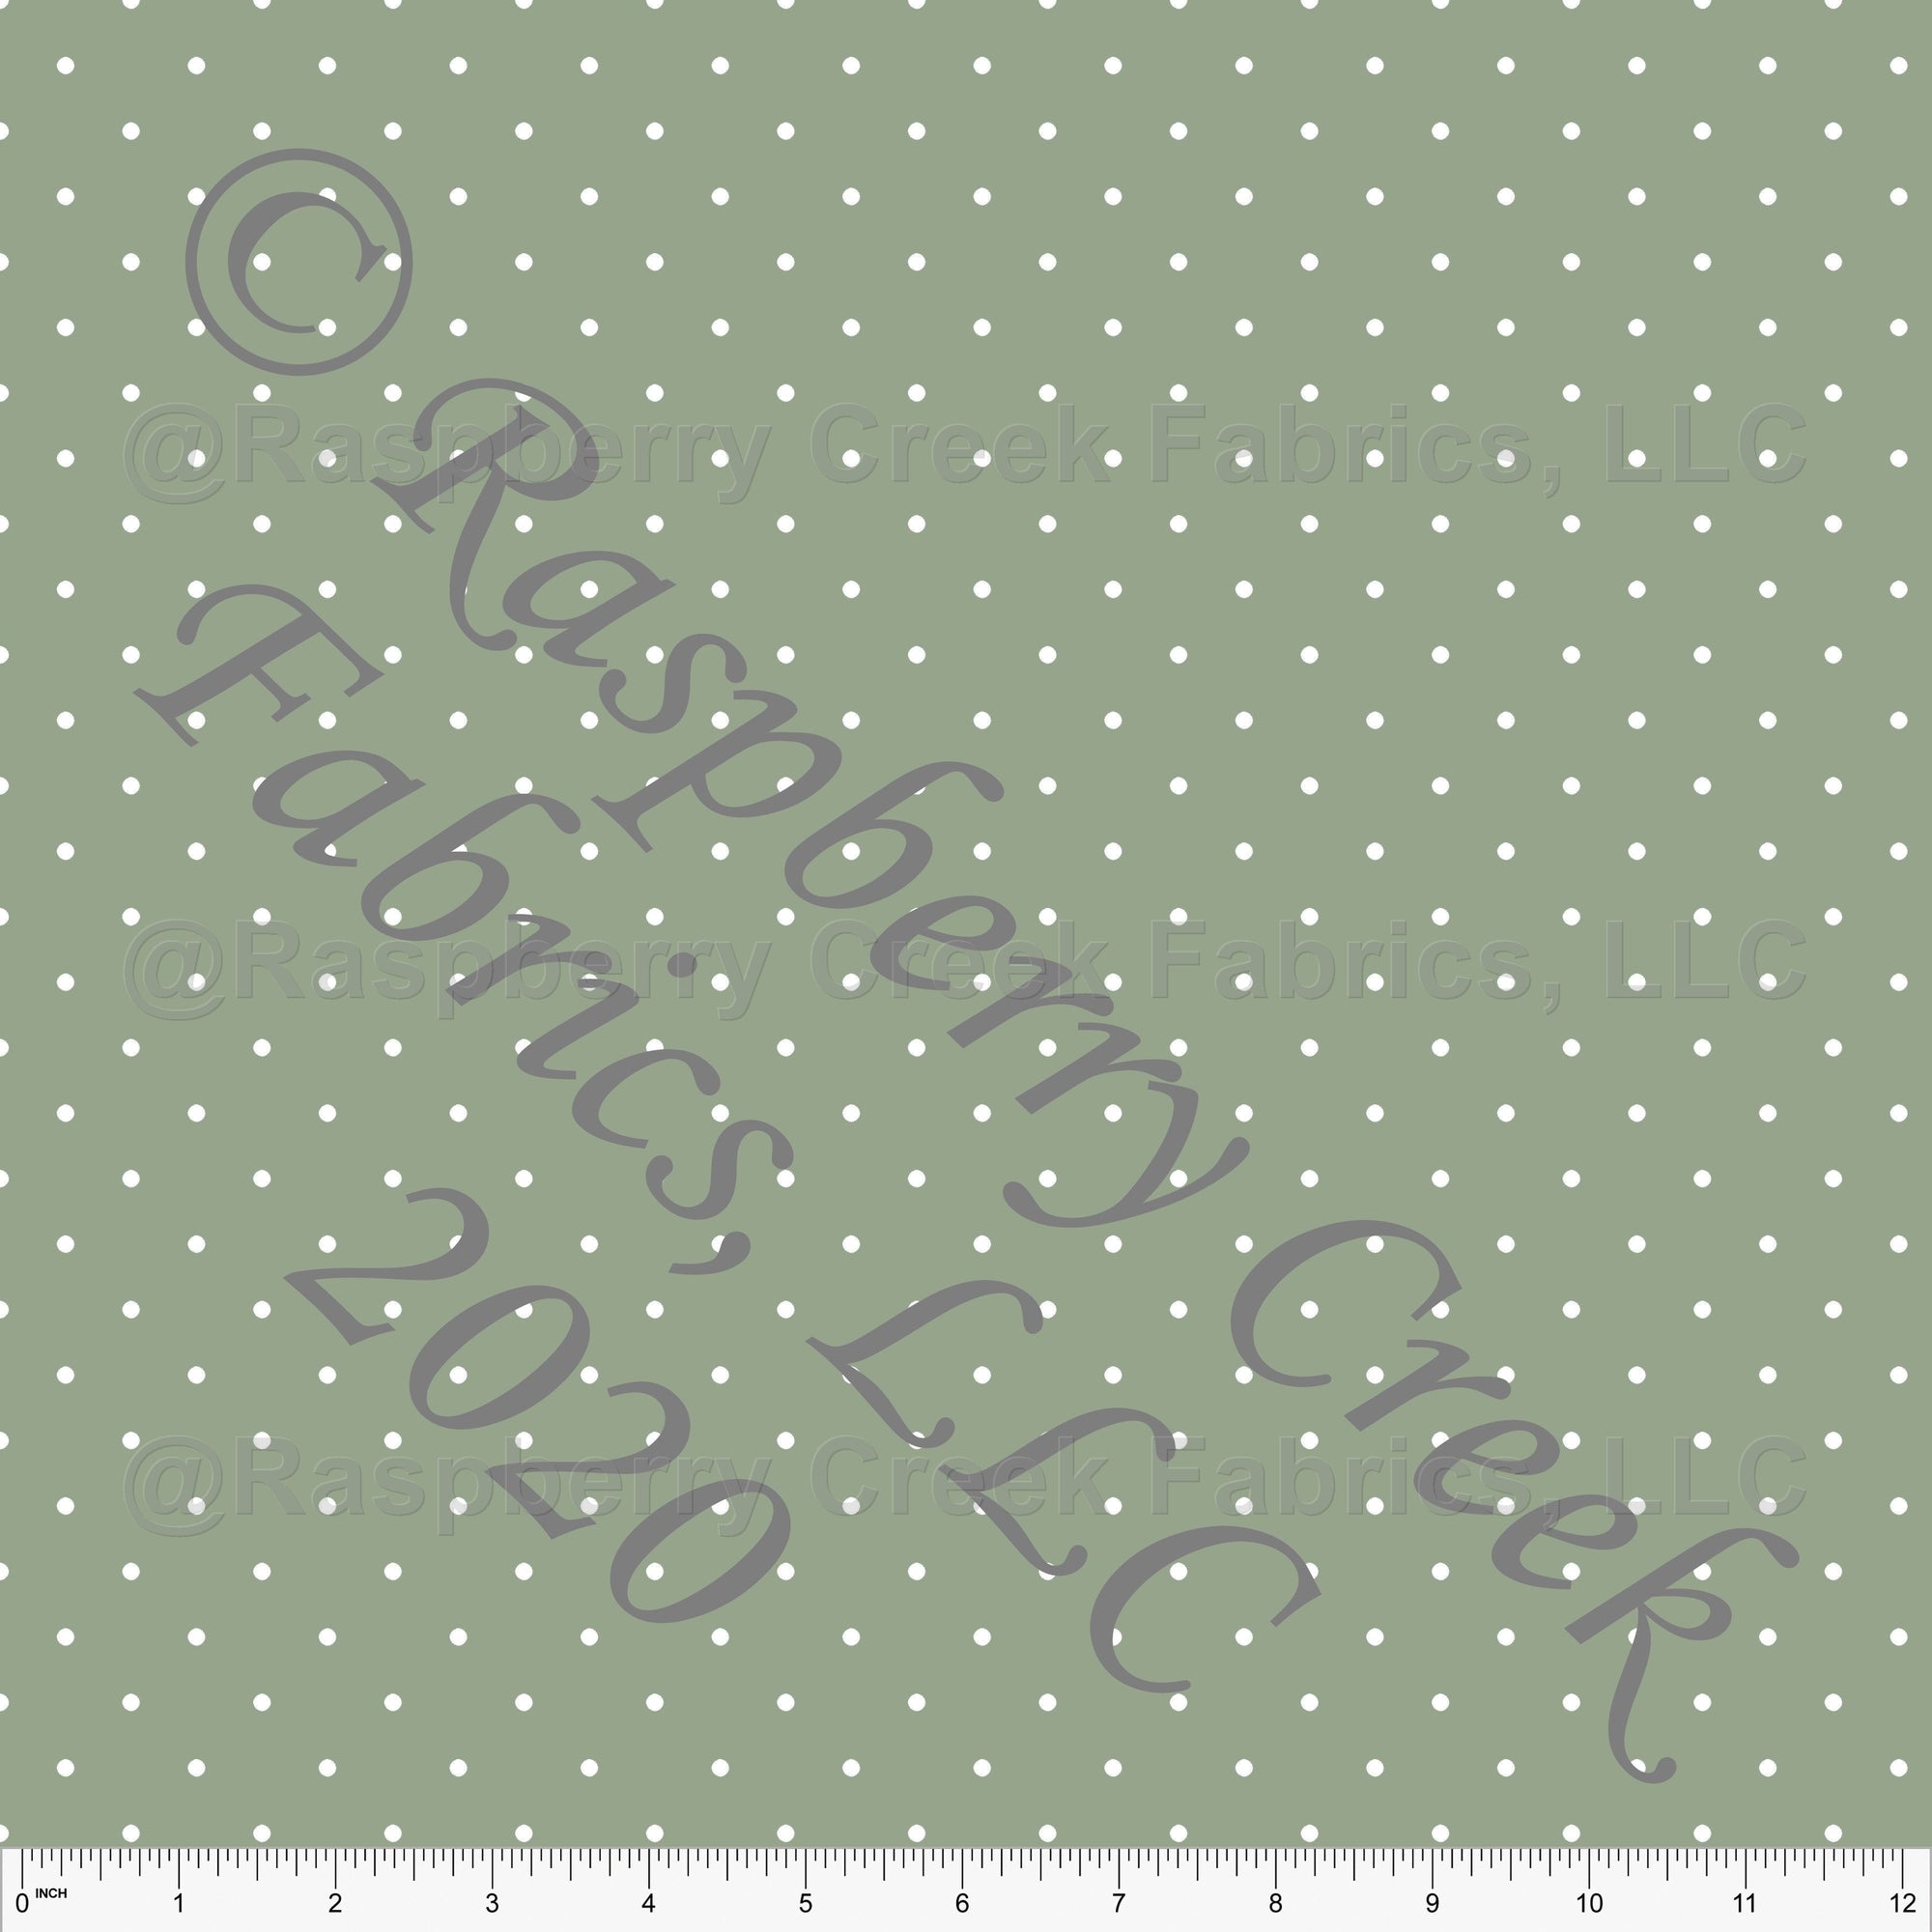 Sage Green and White Pin Dot, Basics for CLUB Fabrics Fabric, Raspberry Creek Fabrics, watermarked